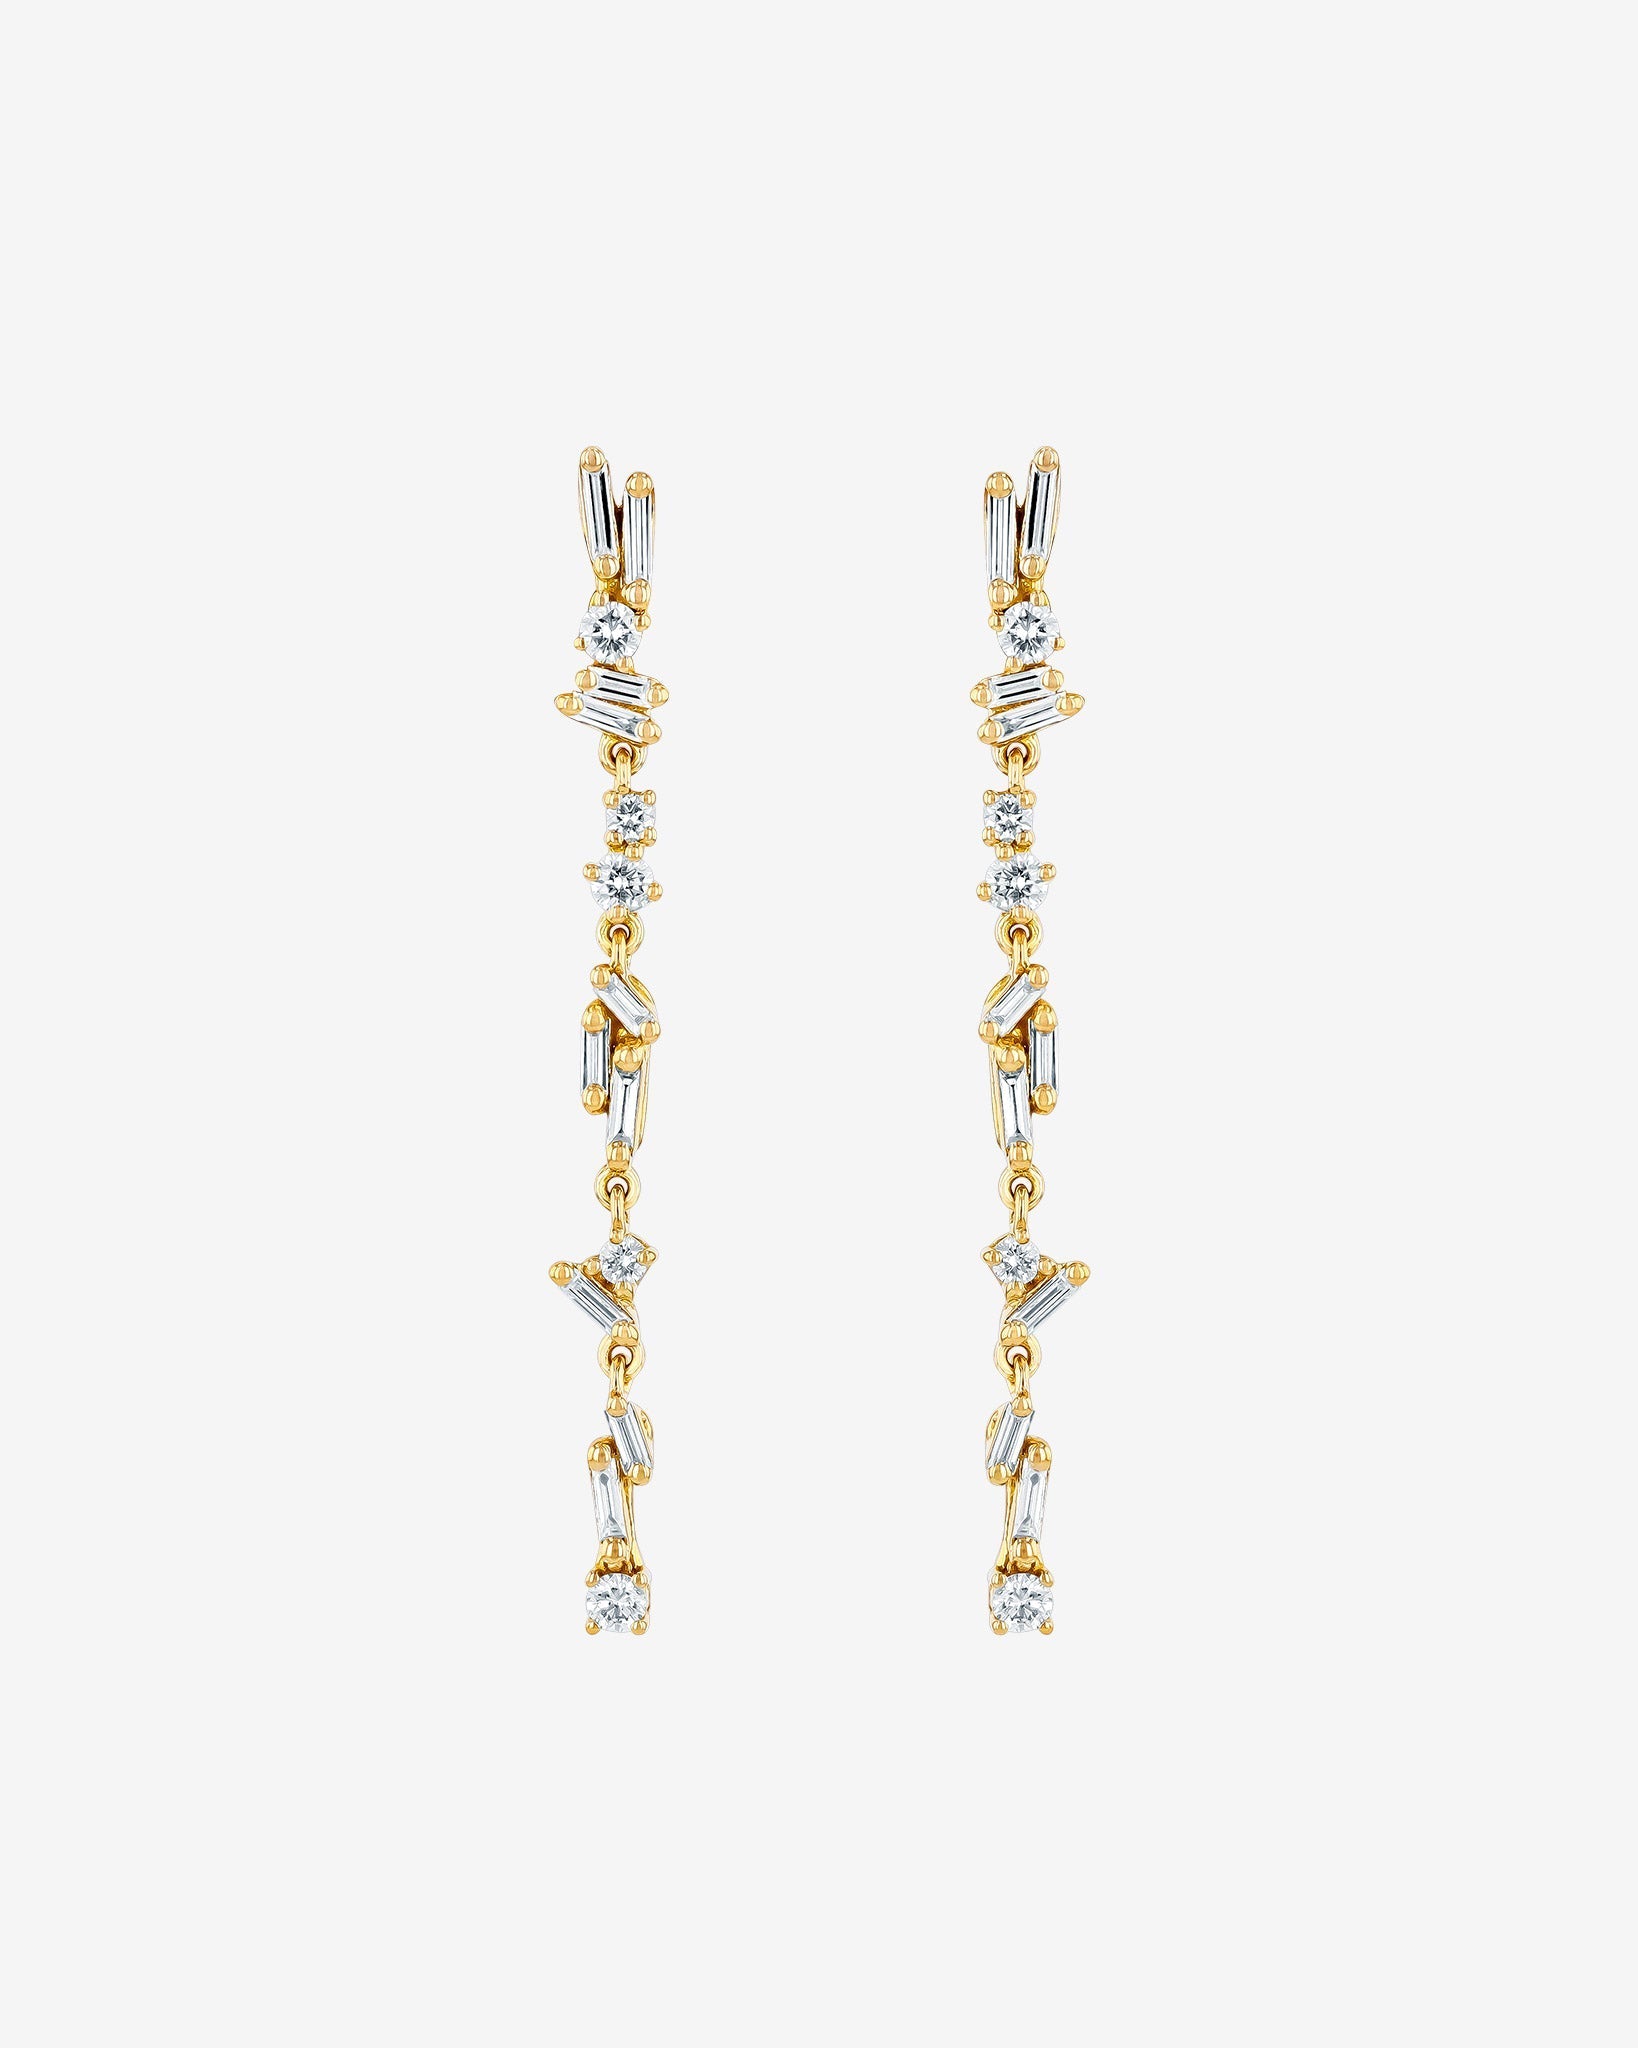 Suzanne Kalan Classic Diamond Sparkler Drop Earrings in 18k yellow gold